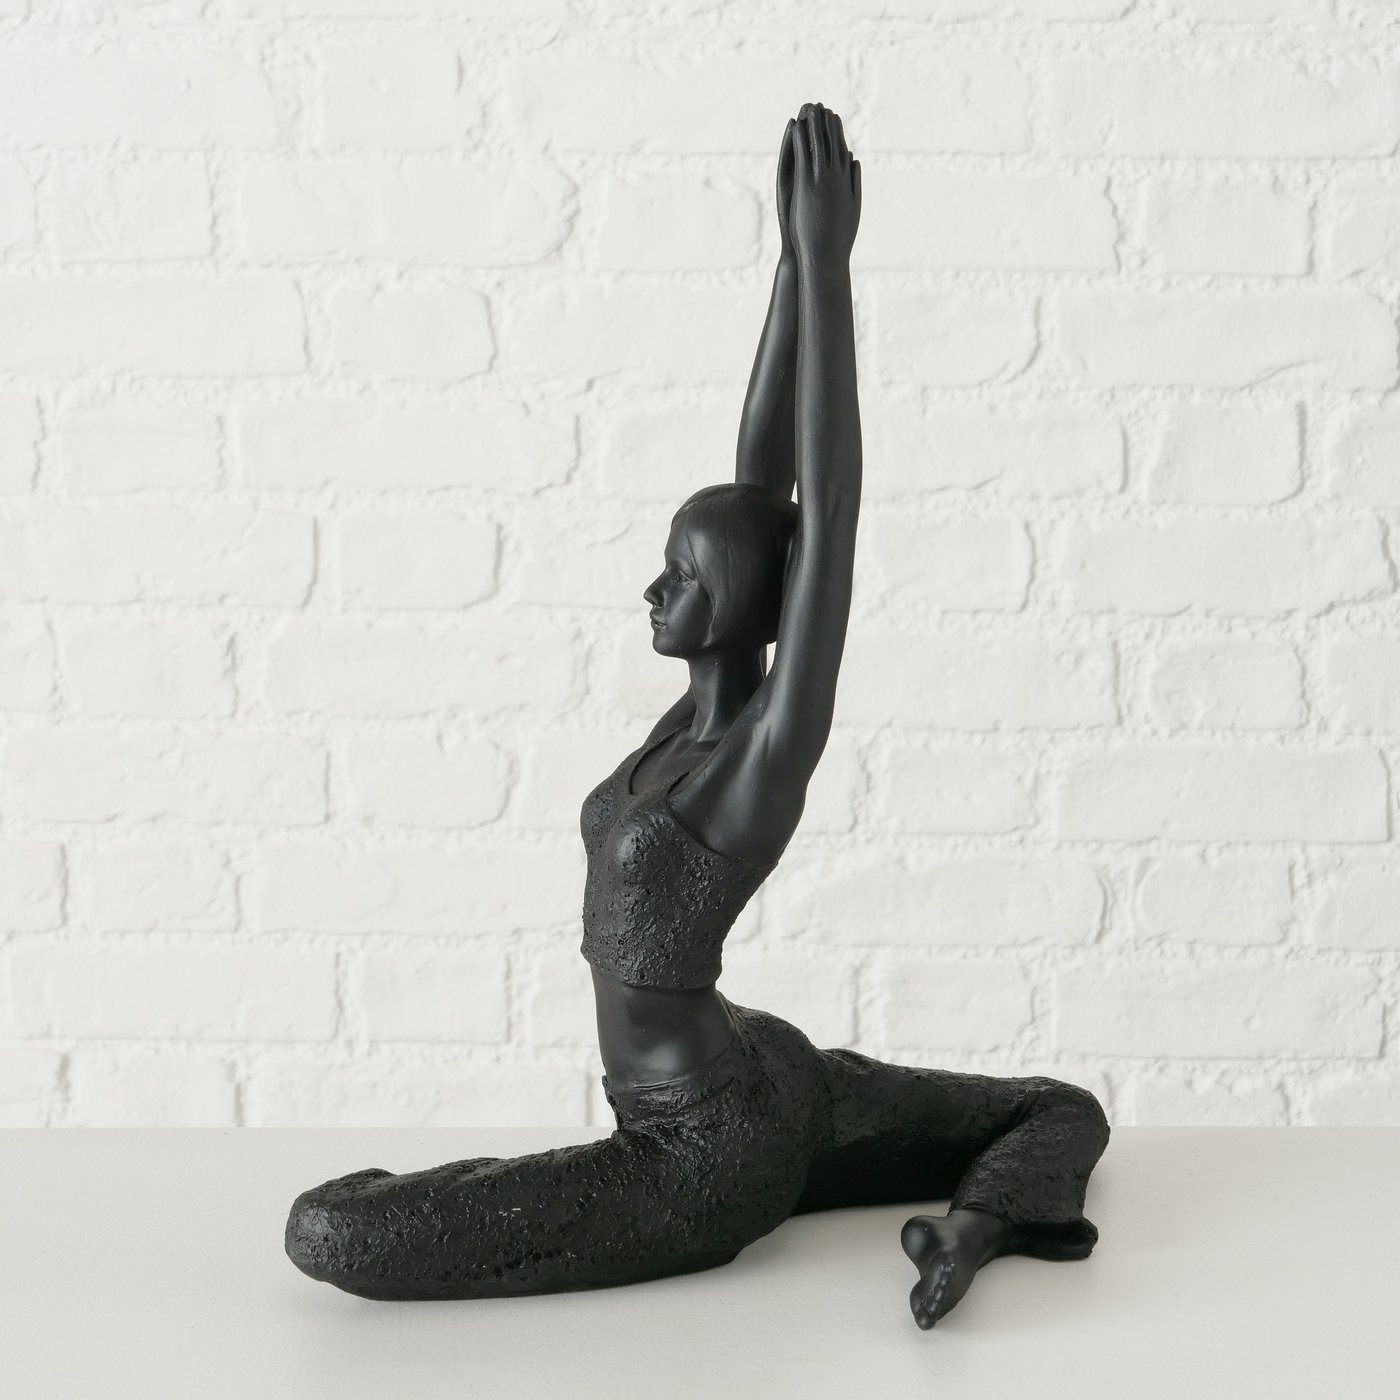 Set 2er Yoga 'Asana' Skulptur 40cm - Yoga Sitzposition, in MF Skulpturen